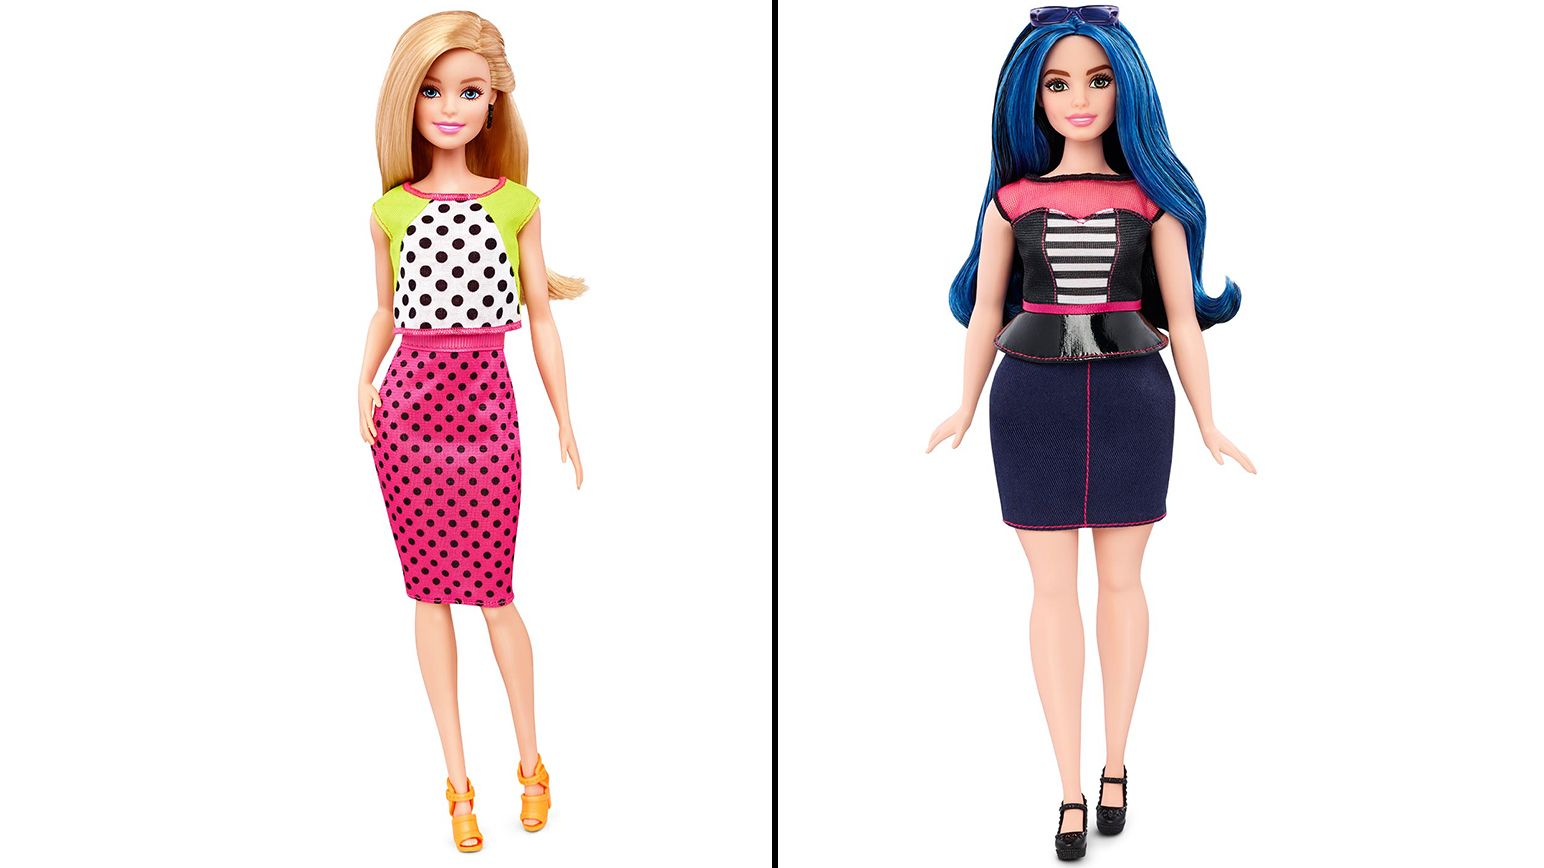 Brochure De andere dag Zeeslak Barbie's new body: curvy, tall and petite | CNN